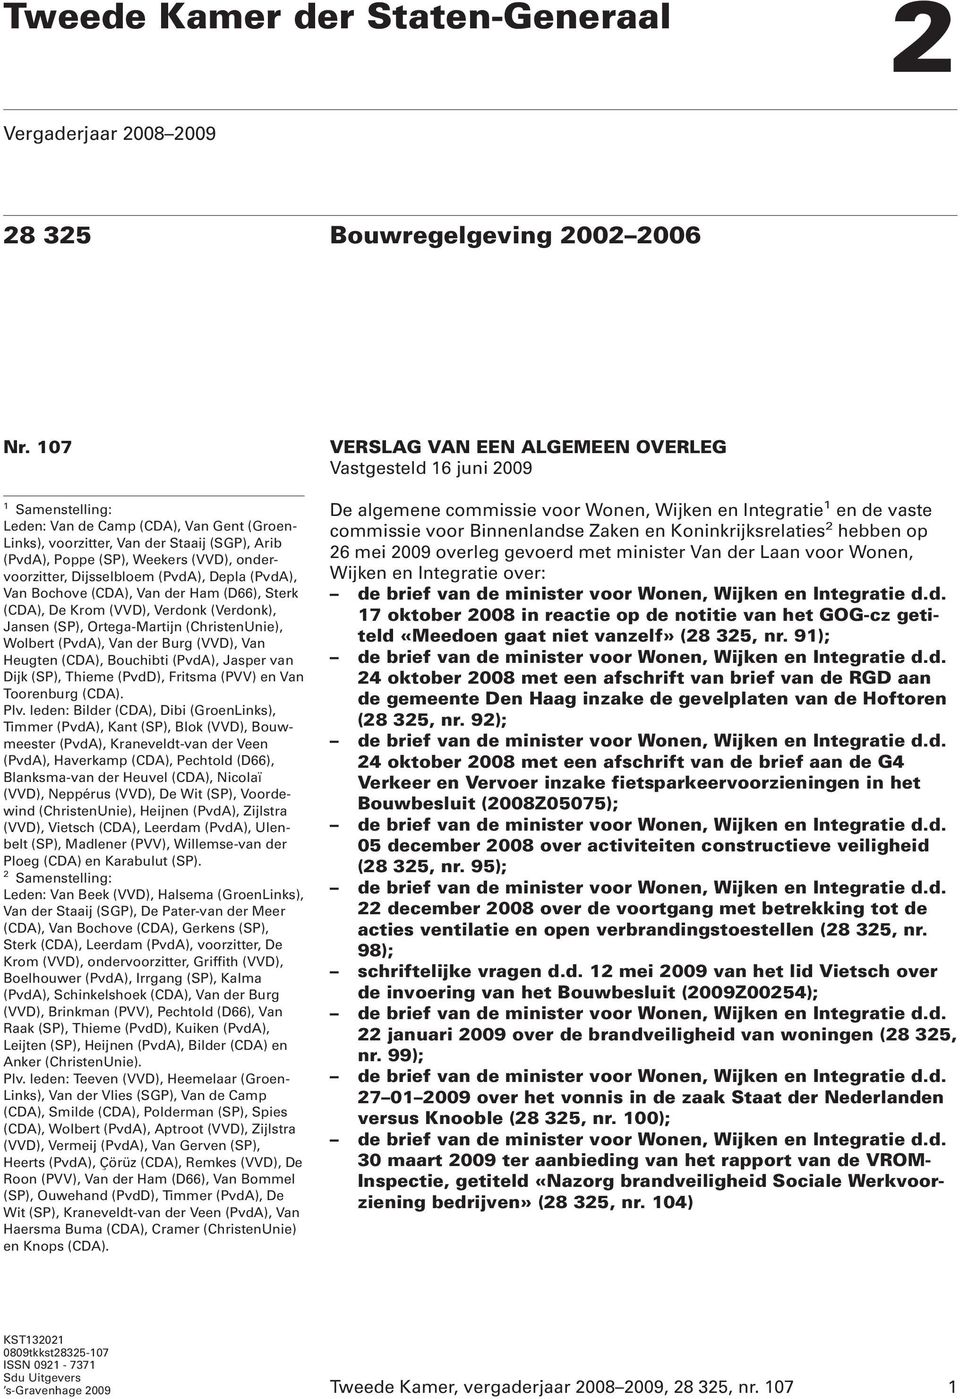 Van Bochove (CDA), Van der Ham (D66), Sterk (CDA), De Krom (VVD), Verdonk (Verdonk), Jansen (SP), Ortega-Martijn (ChristenUnie), Wolbert (PvdA), Van der Burg (VVD), Van Heugten (CDA), Bouchibti